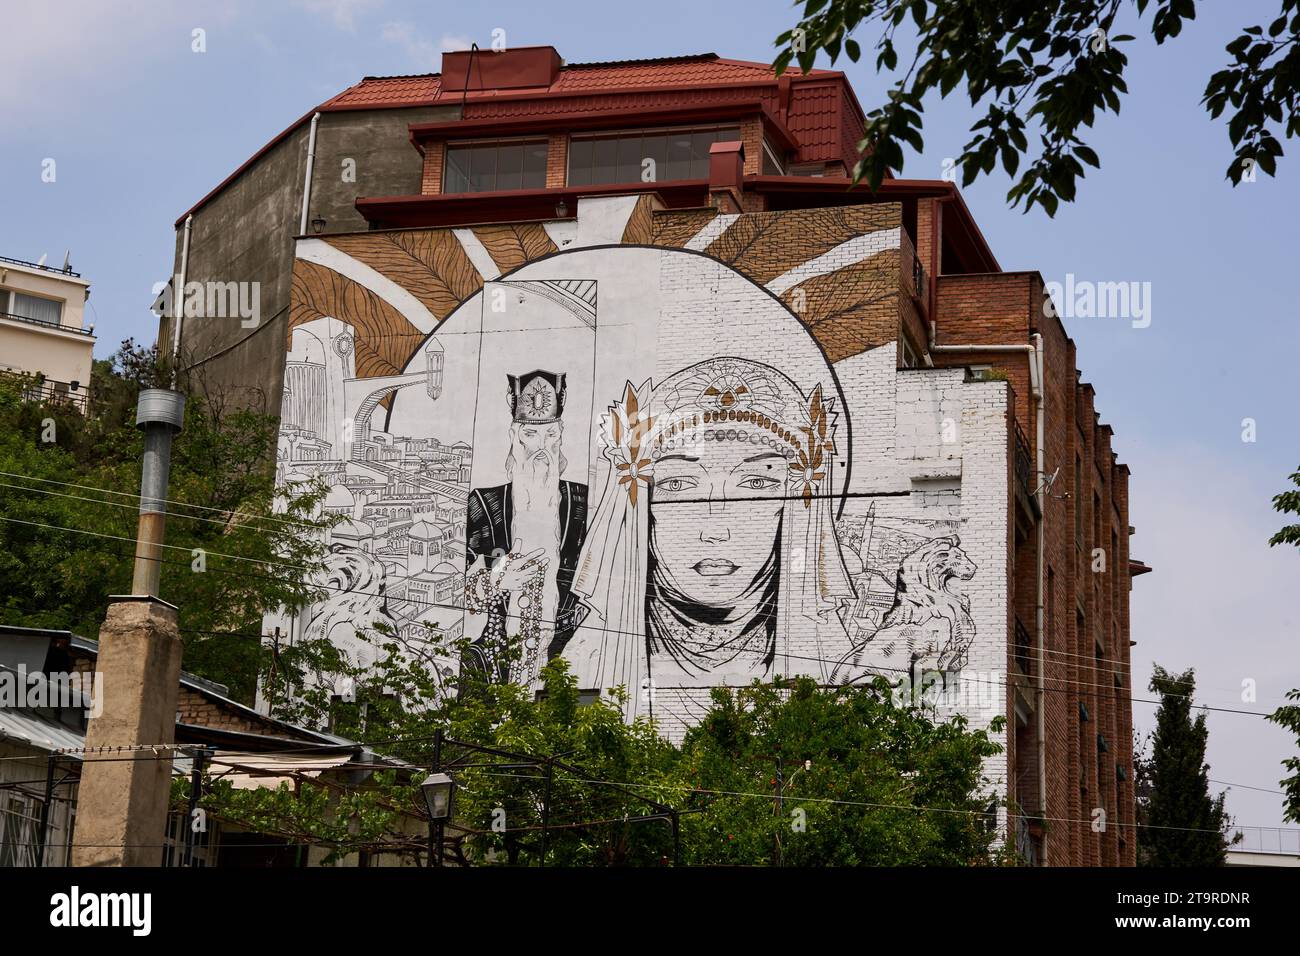 Fassade mit Grafitto, Stadtteil Mtatsminda, Altstadt, Tiflis, Tiflis, Tbilissi, Georgien Stockfoto